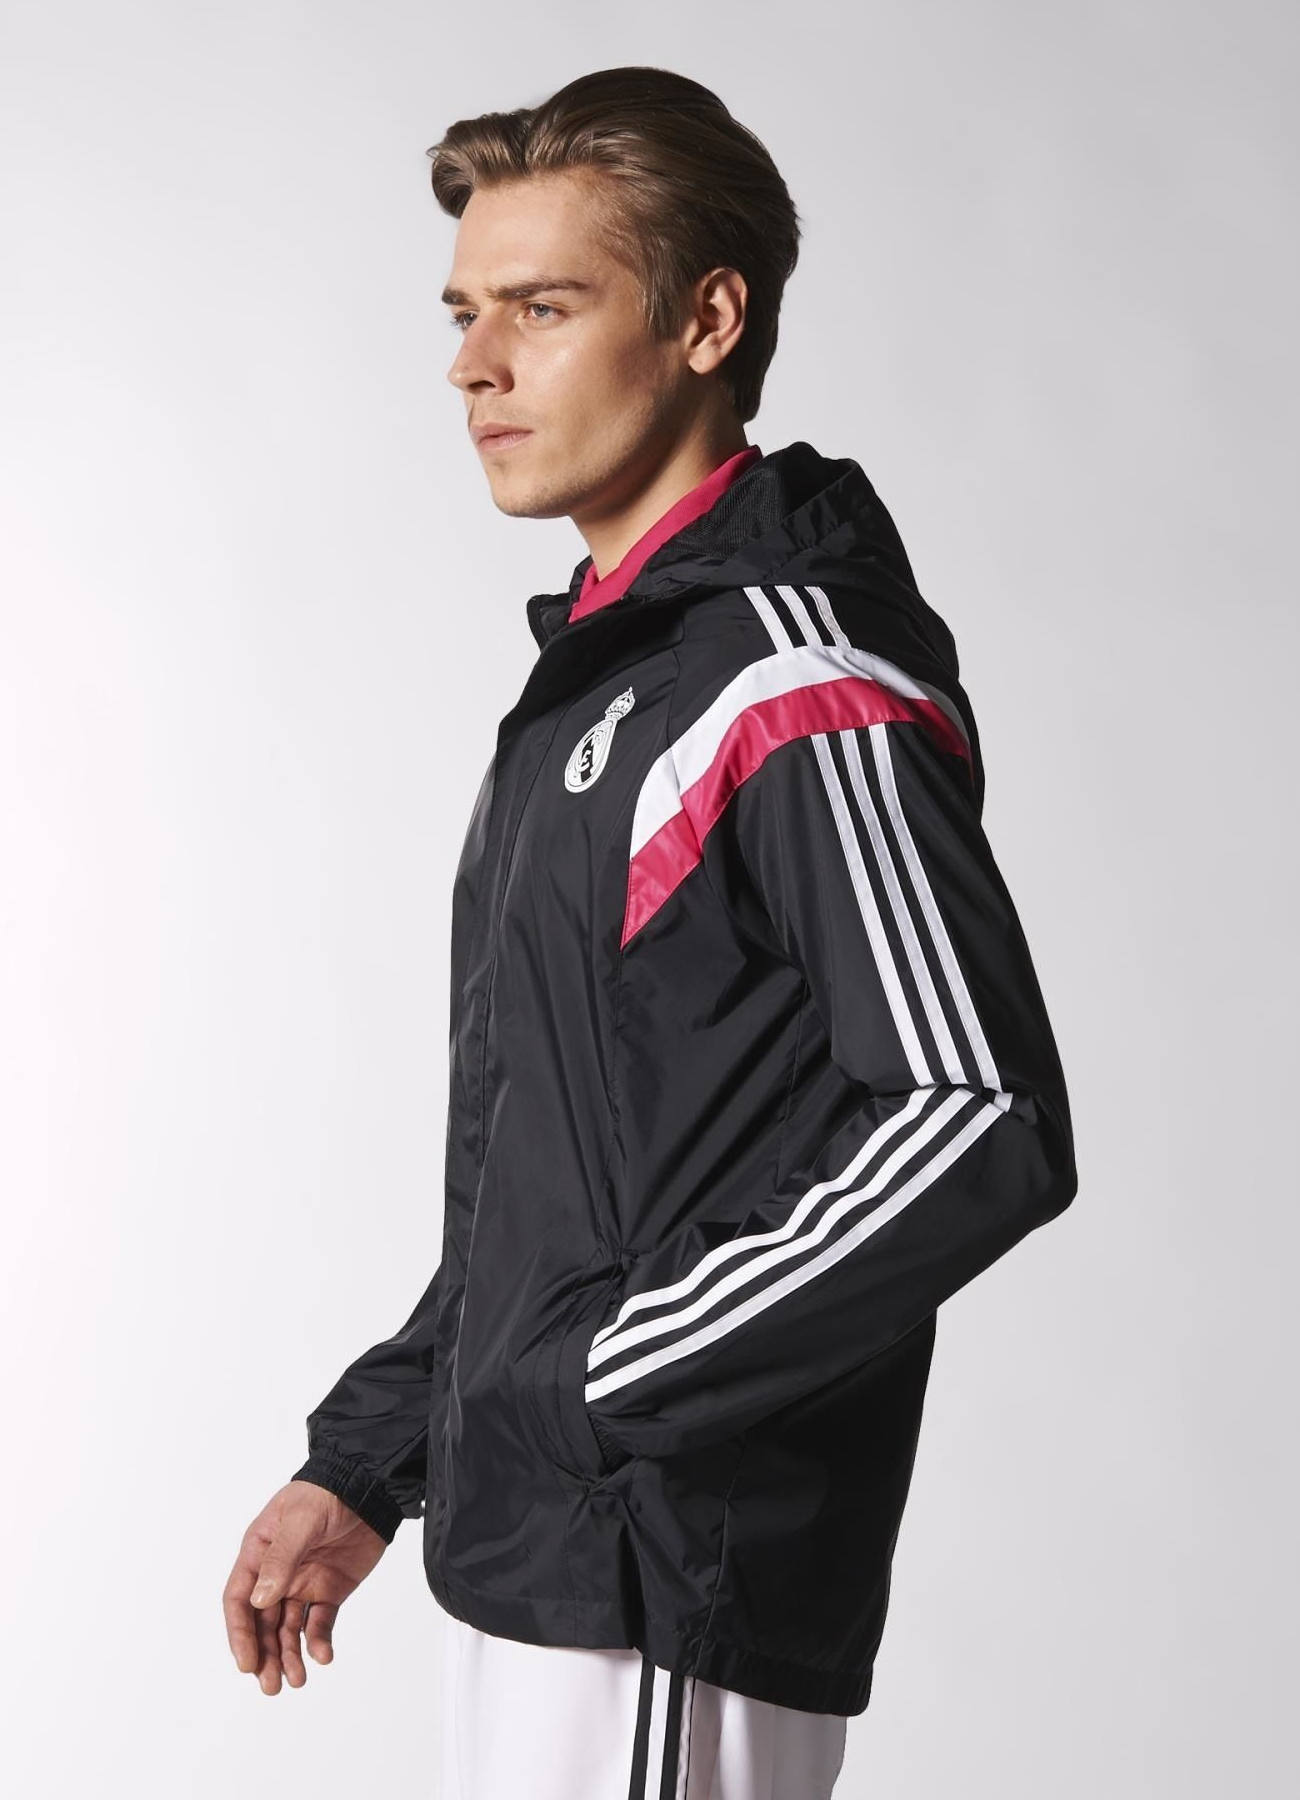 k way All weather Real Madrid Adidas Training Jacke Jacket 2014 15 Herren | eBay